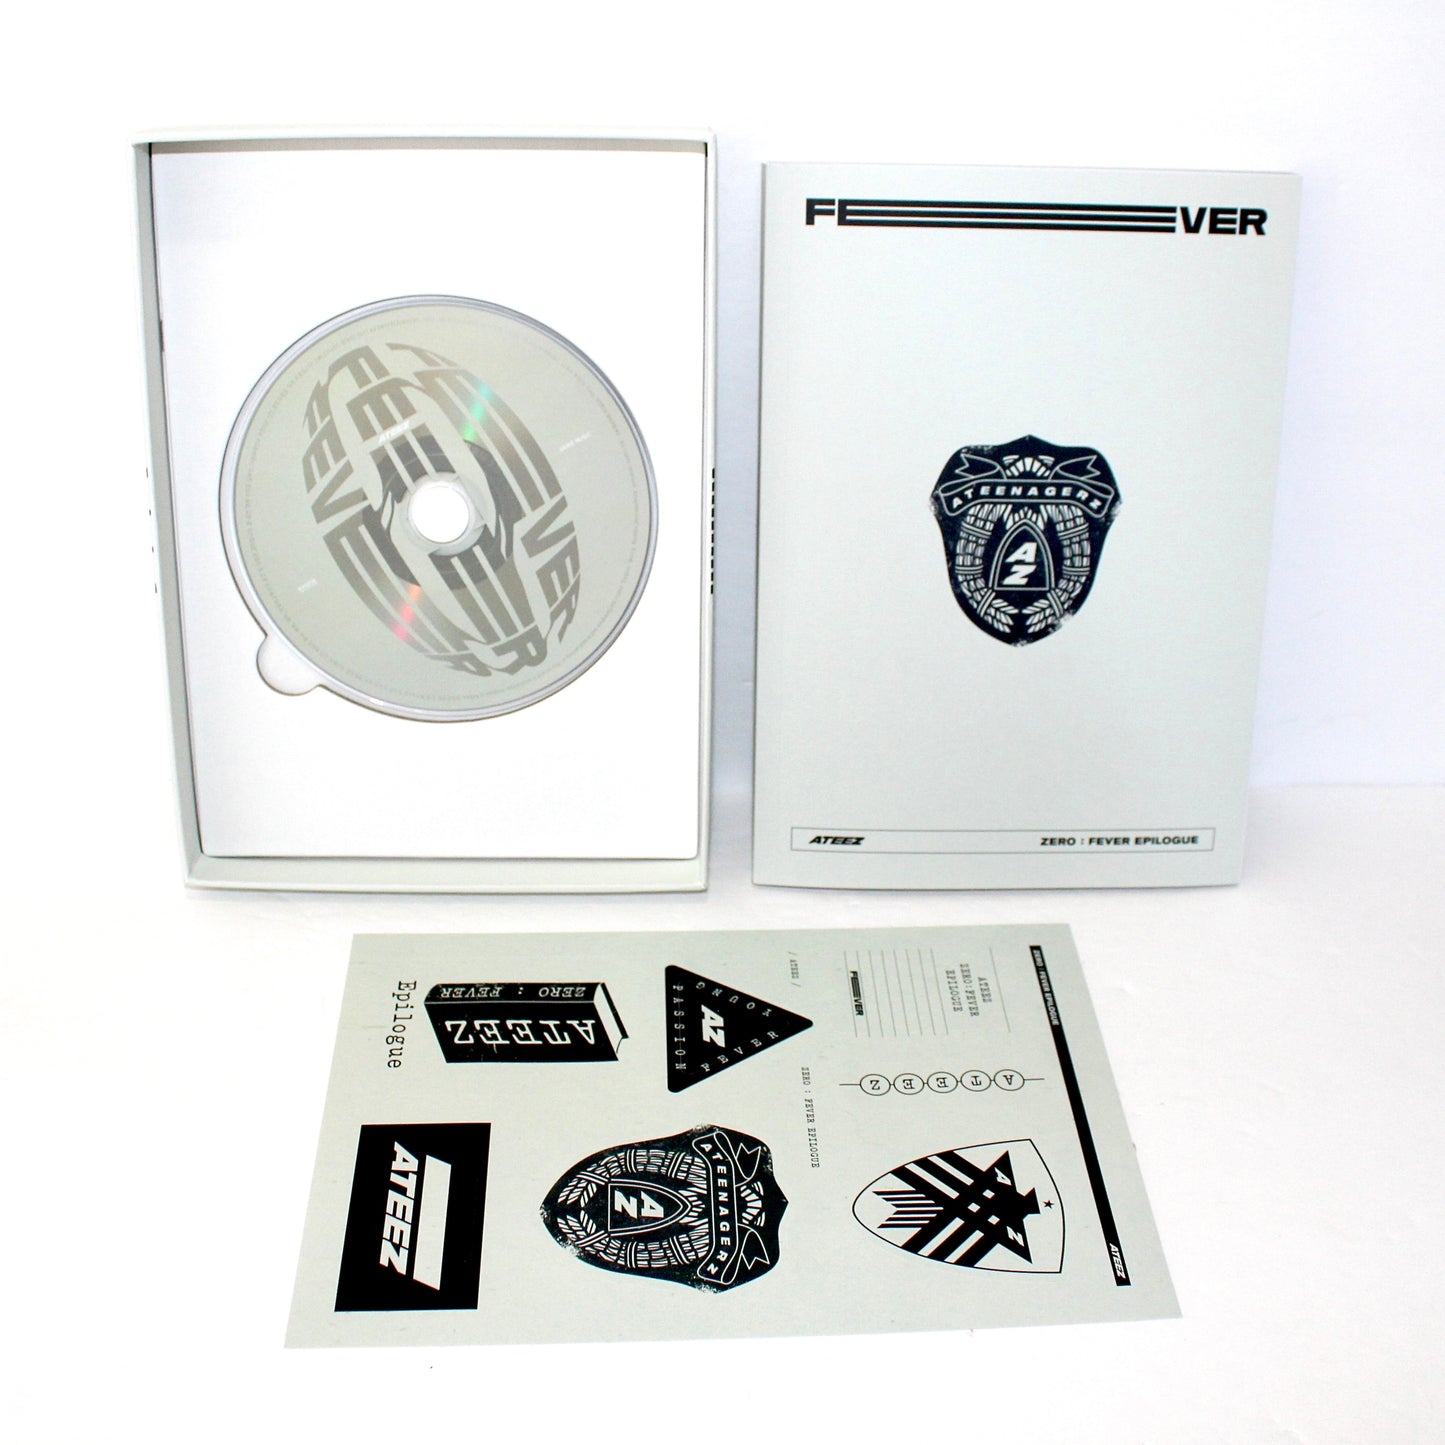 ZERO : FEVER EPILOGUE - Album by ATEEZ